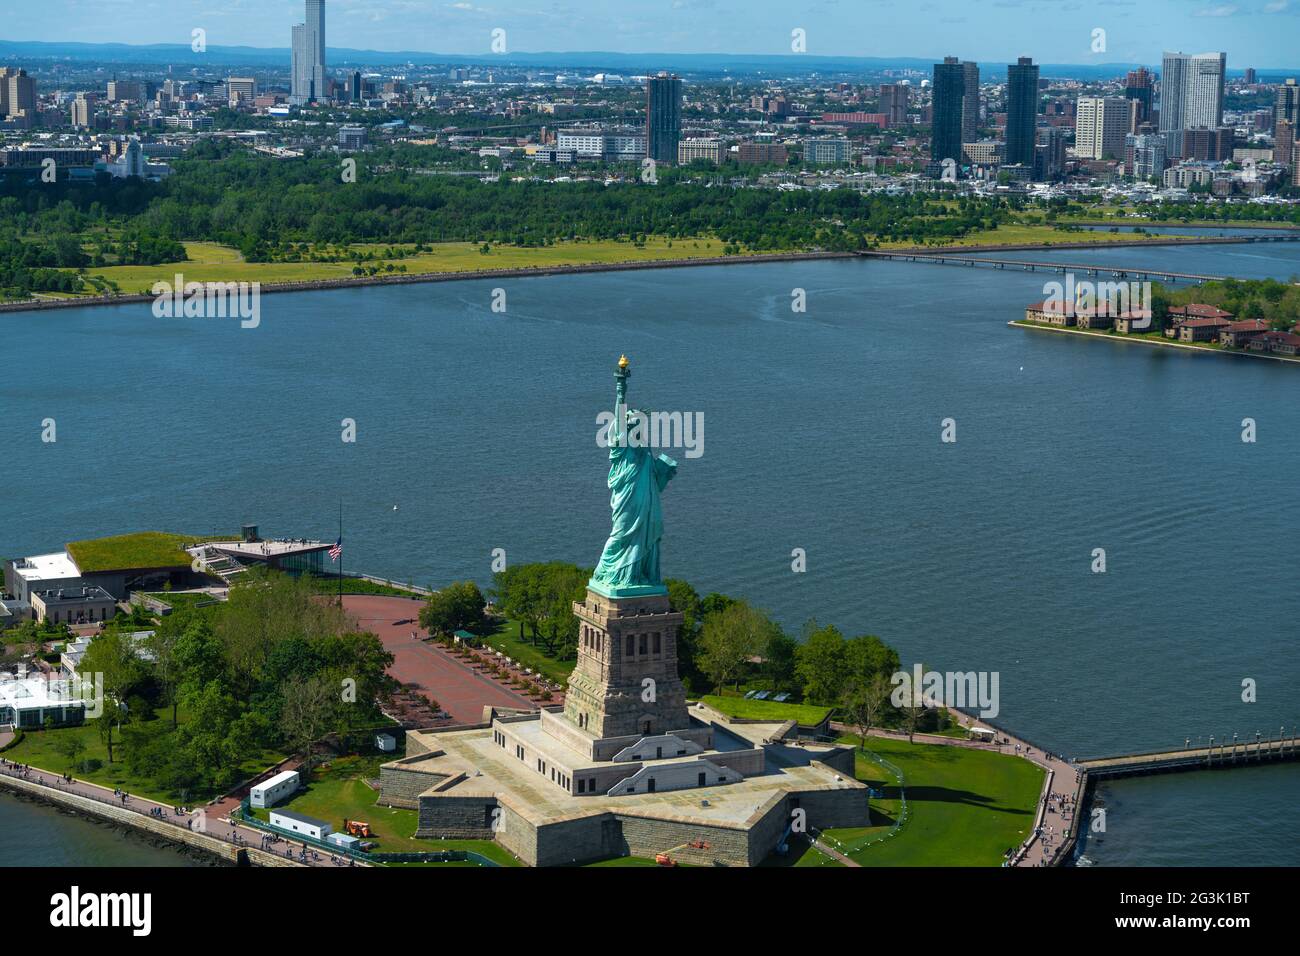 New York City Helicopter Photoshoot Stock Photo